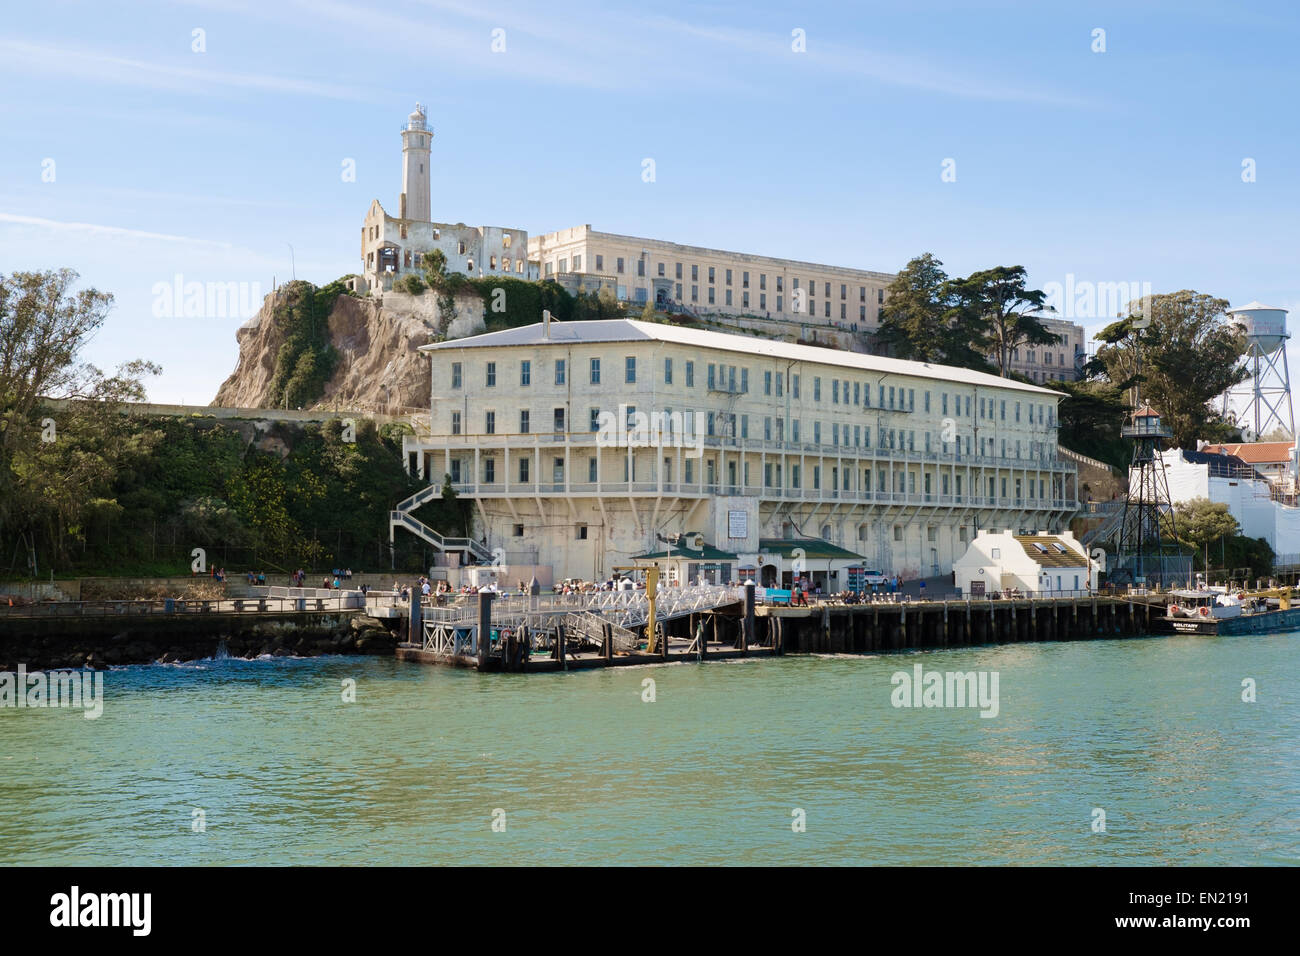 Approaching Alcatraz penitentiary prison island by boat Stock Photo